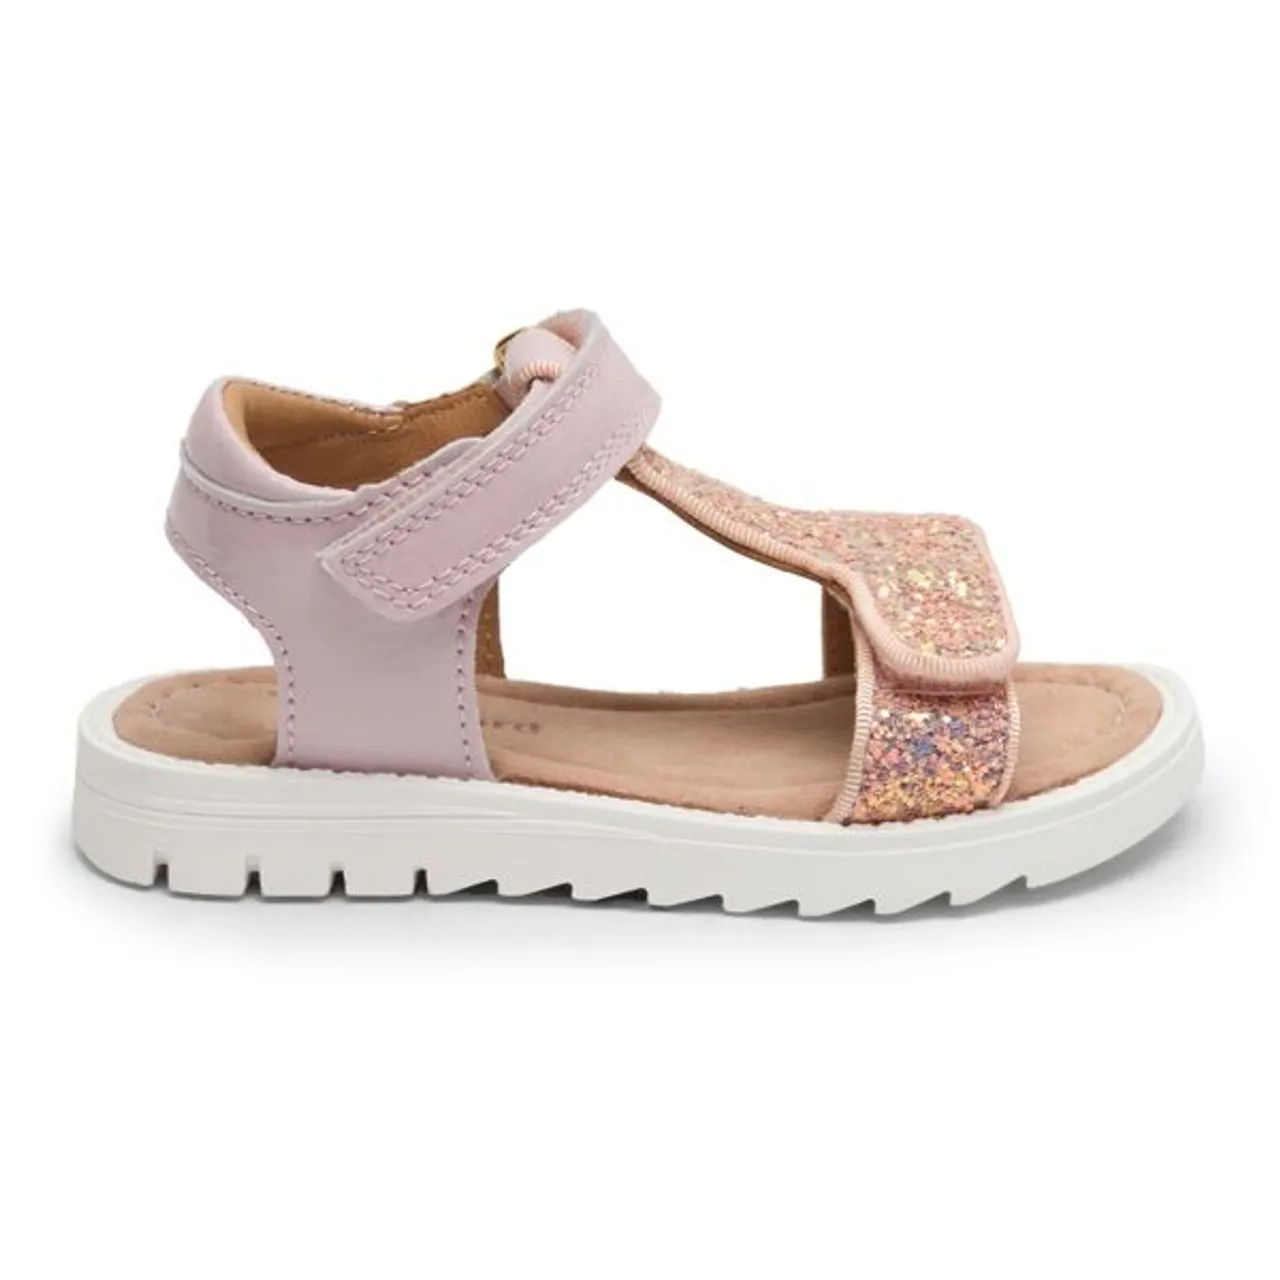 Sandale BISGAARD "alma" Gr. 33, rosa (rosa glitter) Kinder Schuhe Mädchenschuhe